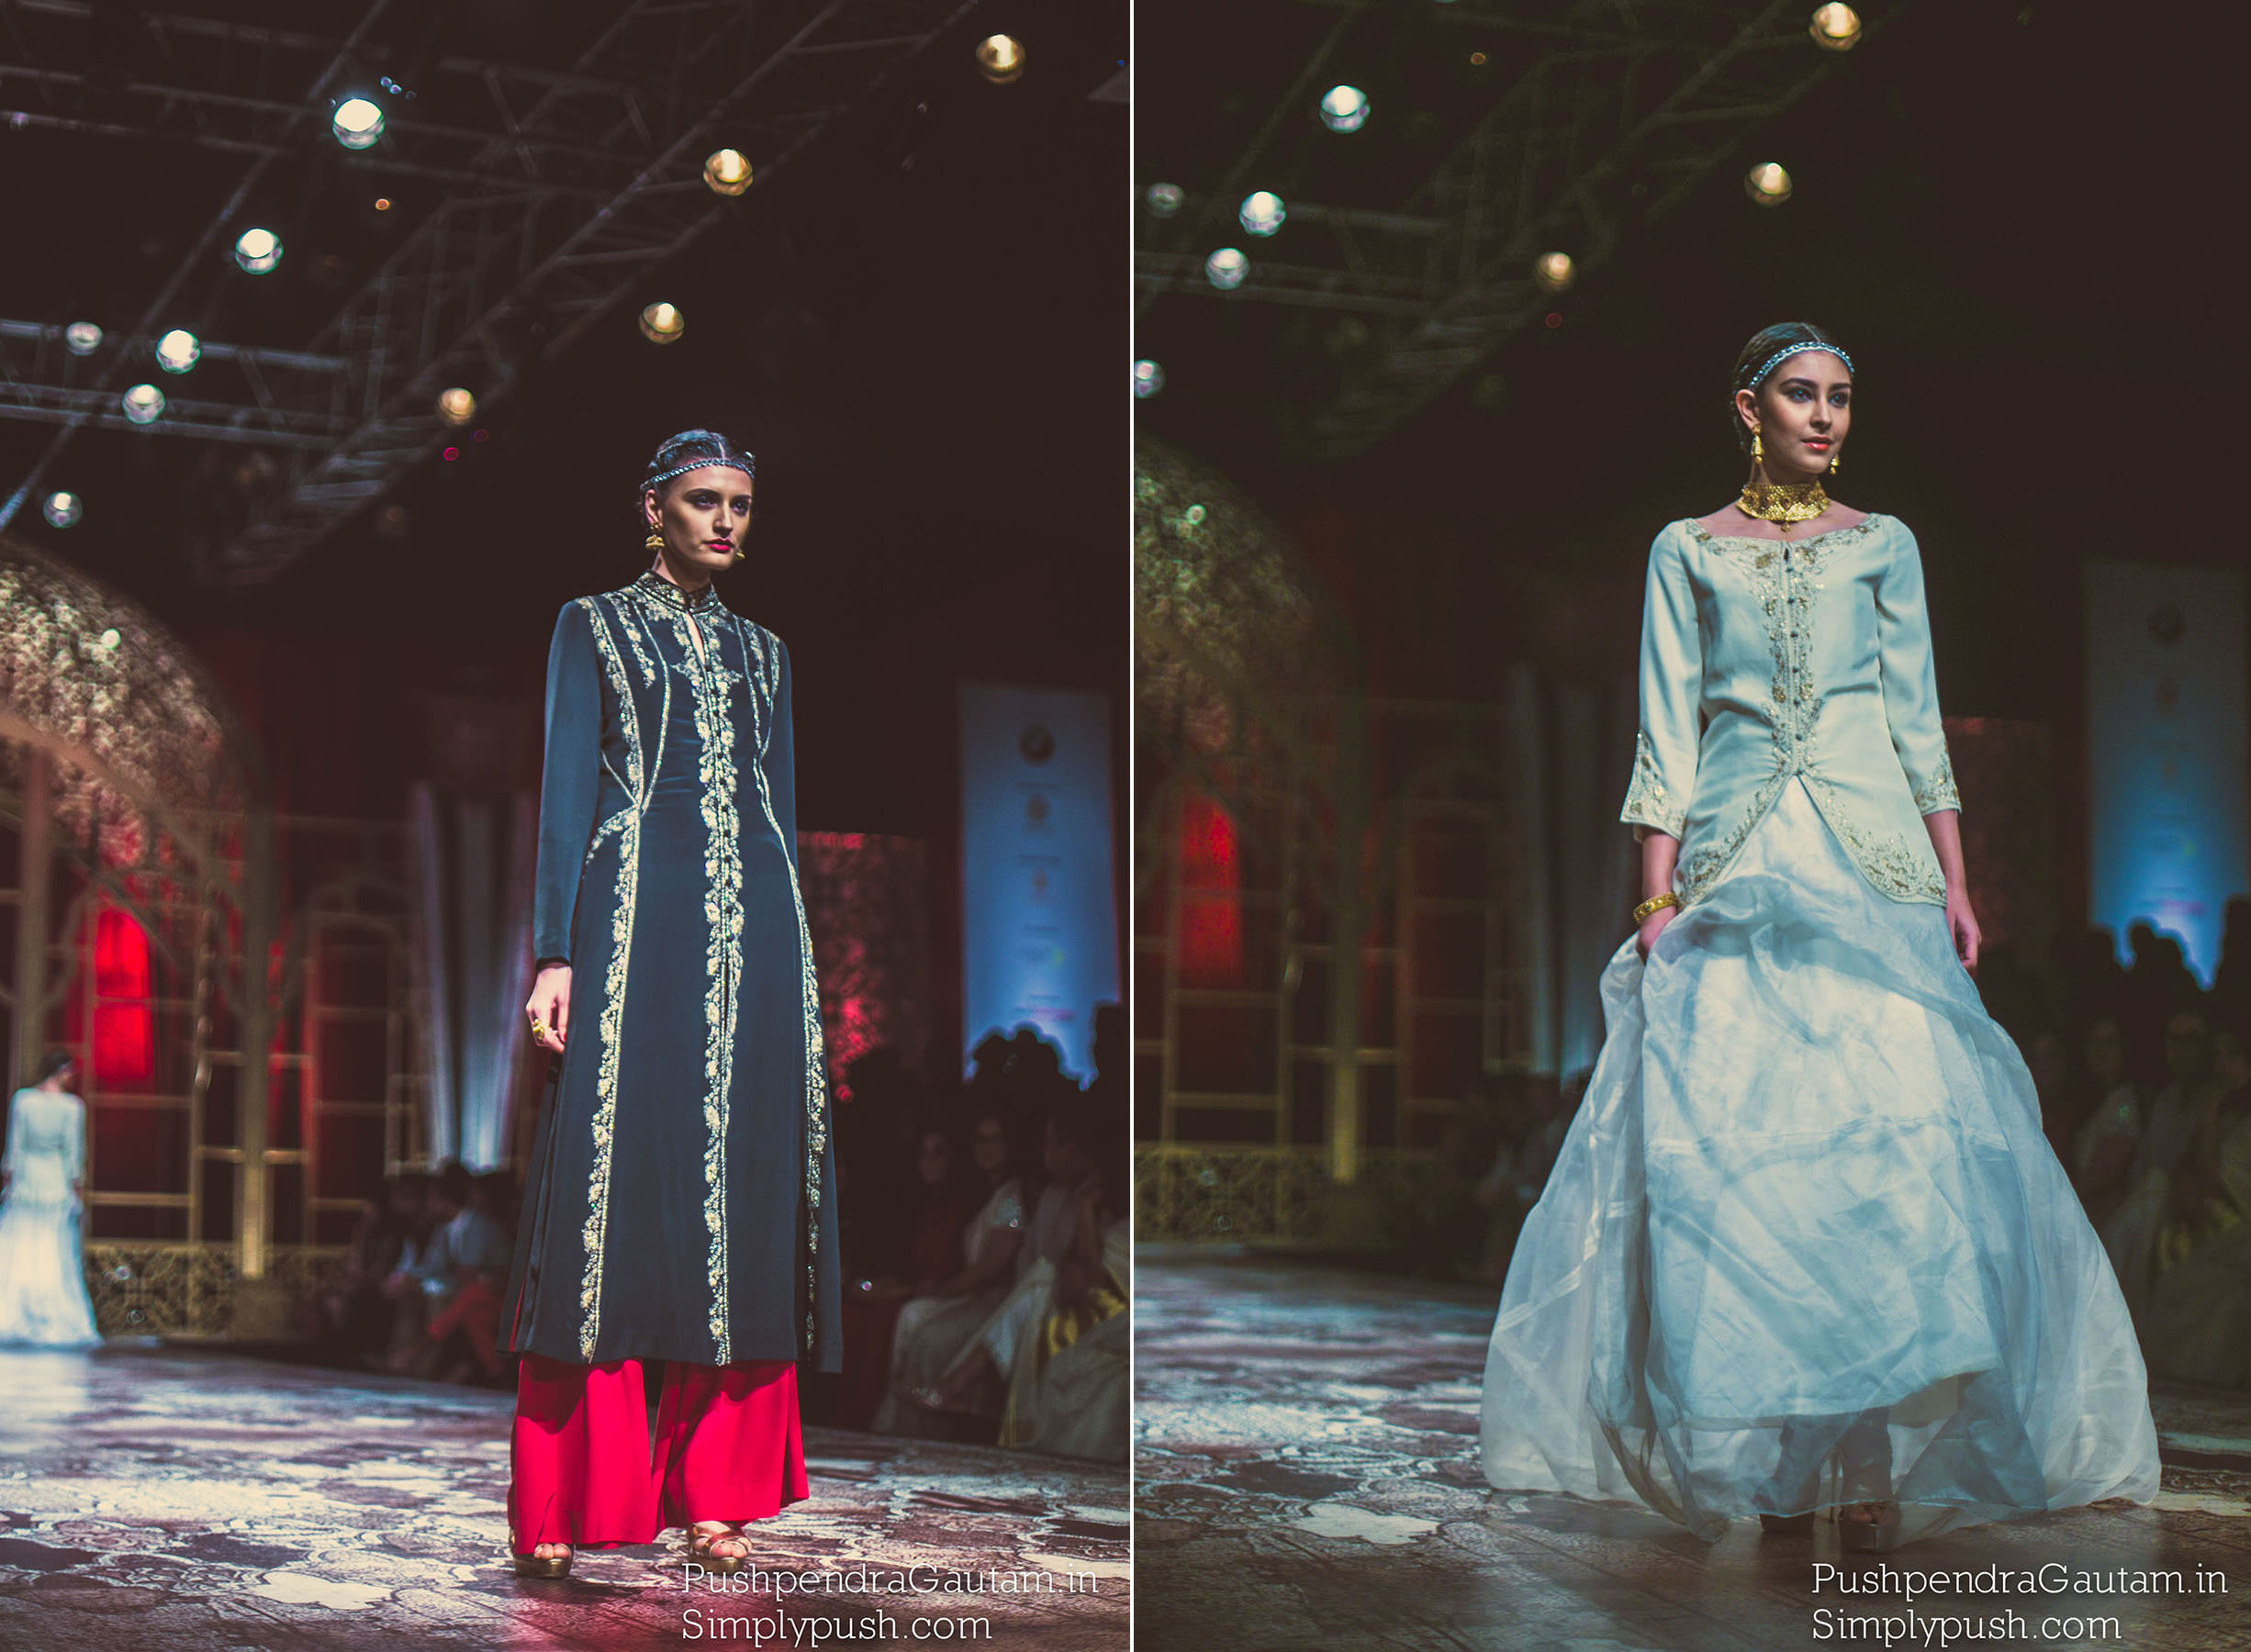 Raghavendra Rathore at India Bridal Fashion Week Delhi Pics | India ...